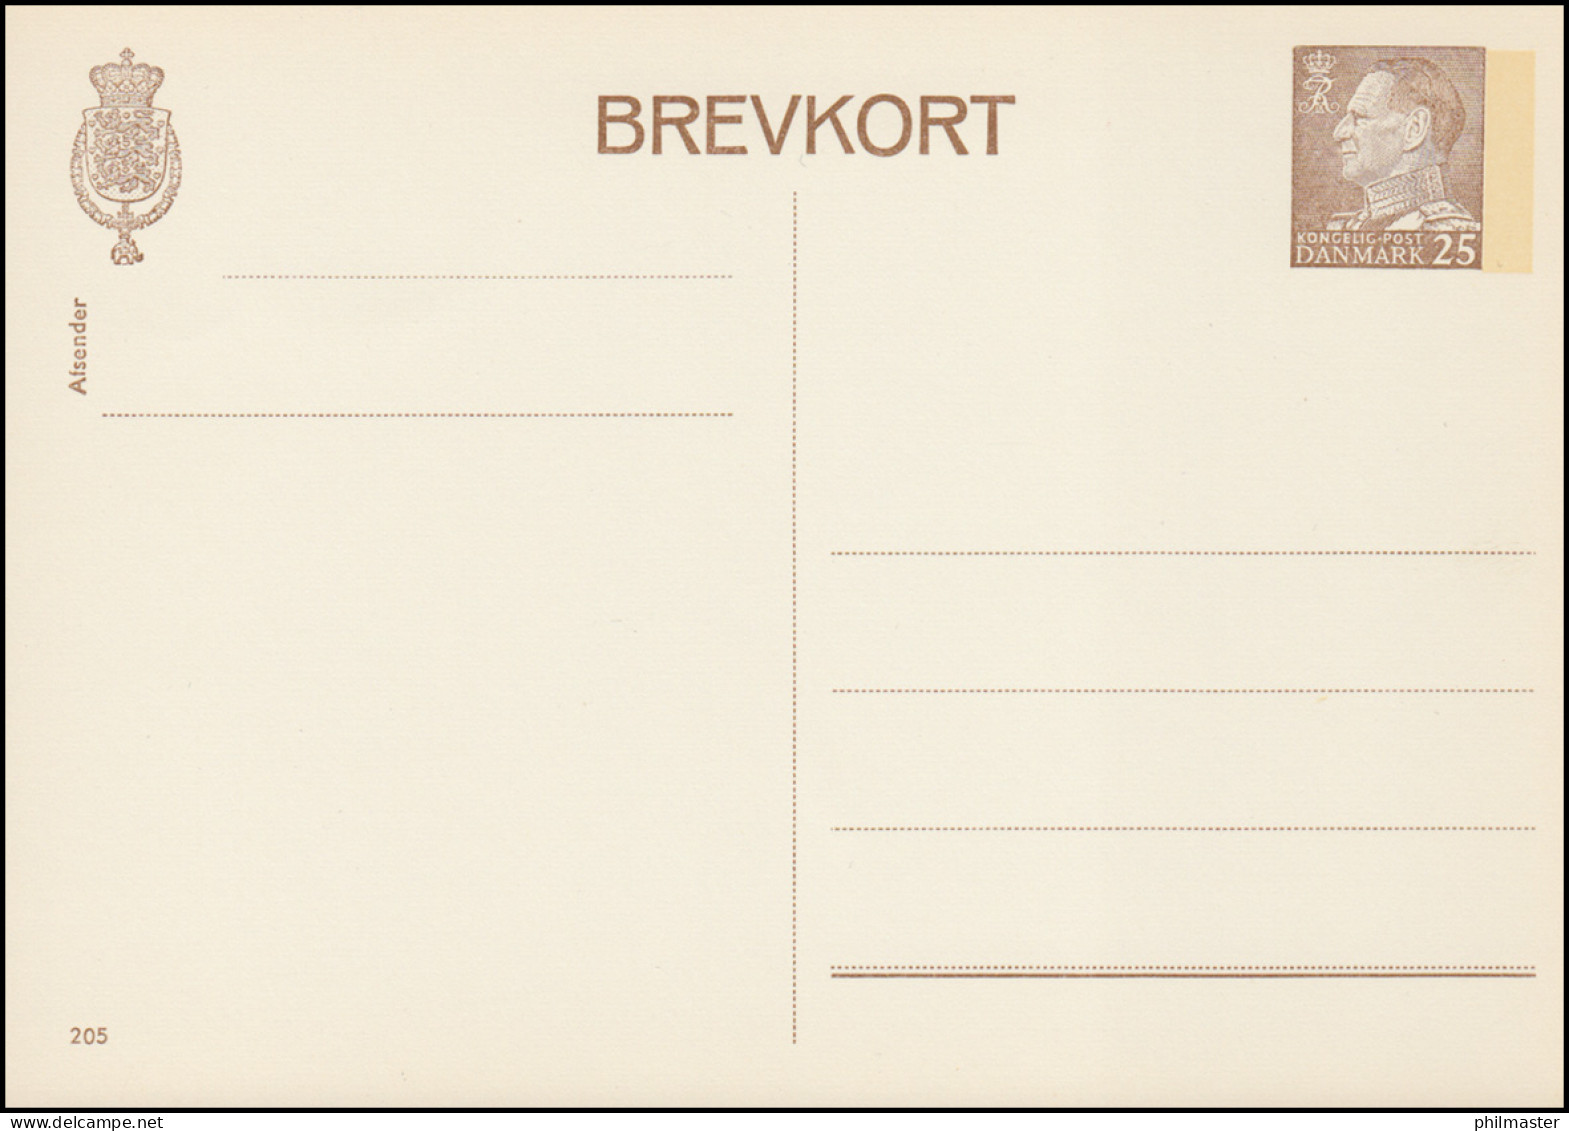 Dänemark Postkarte P 256 Frederik IX. 25 Öre, Kz. 205, ** - Enteros Postales